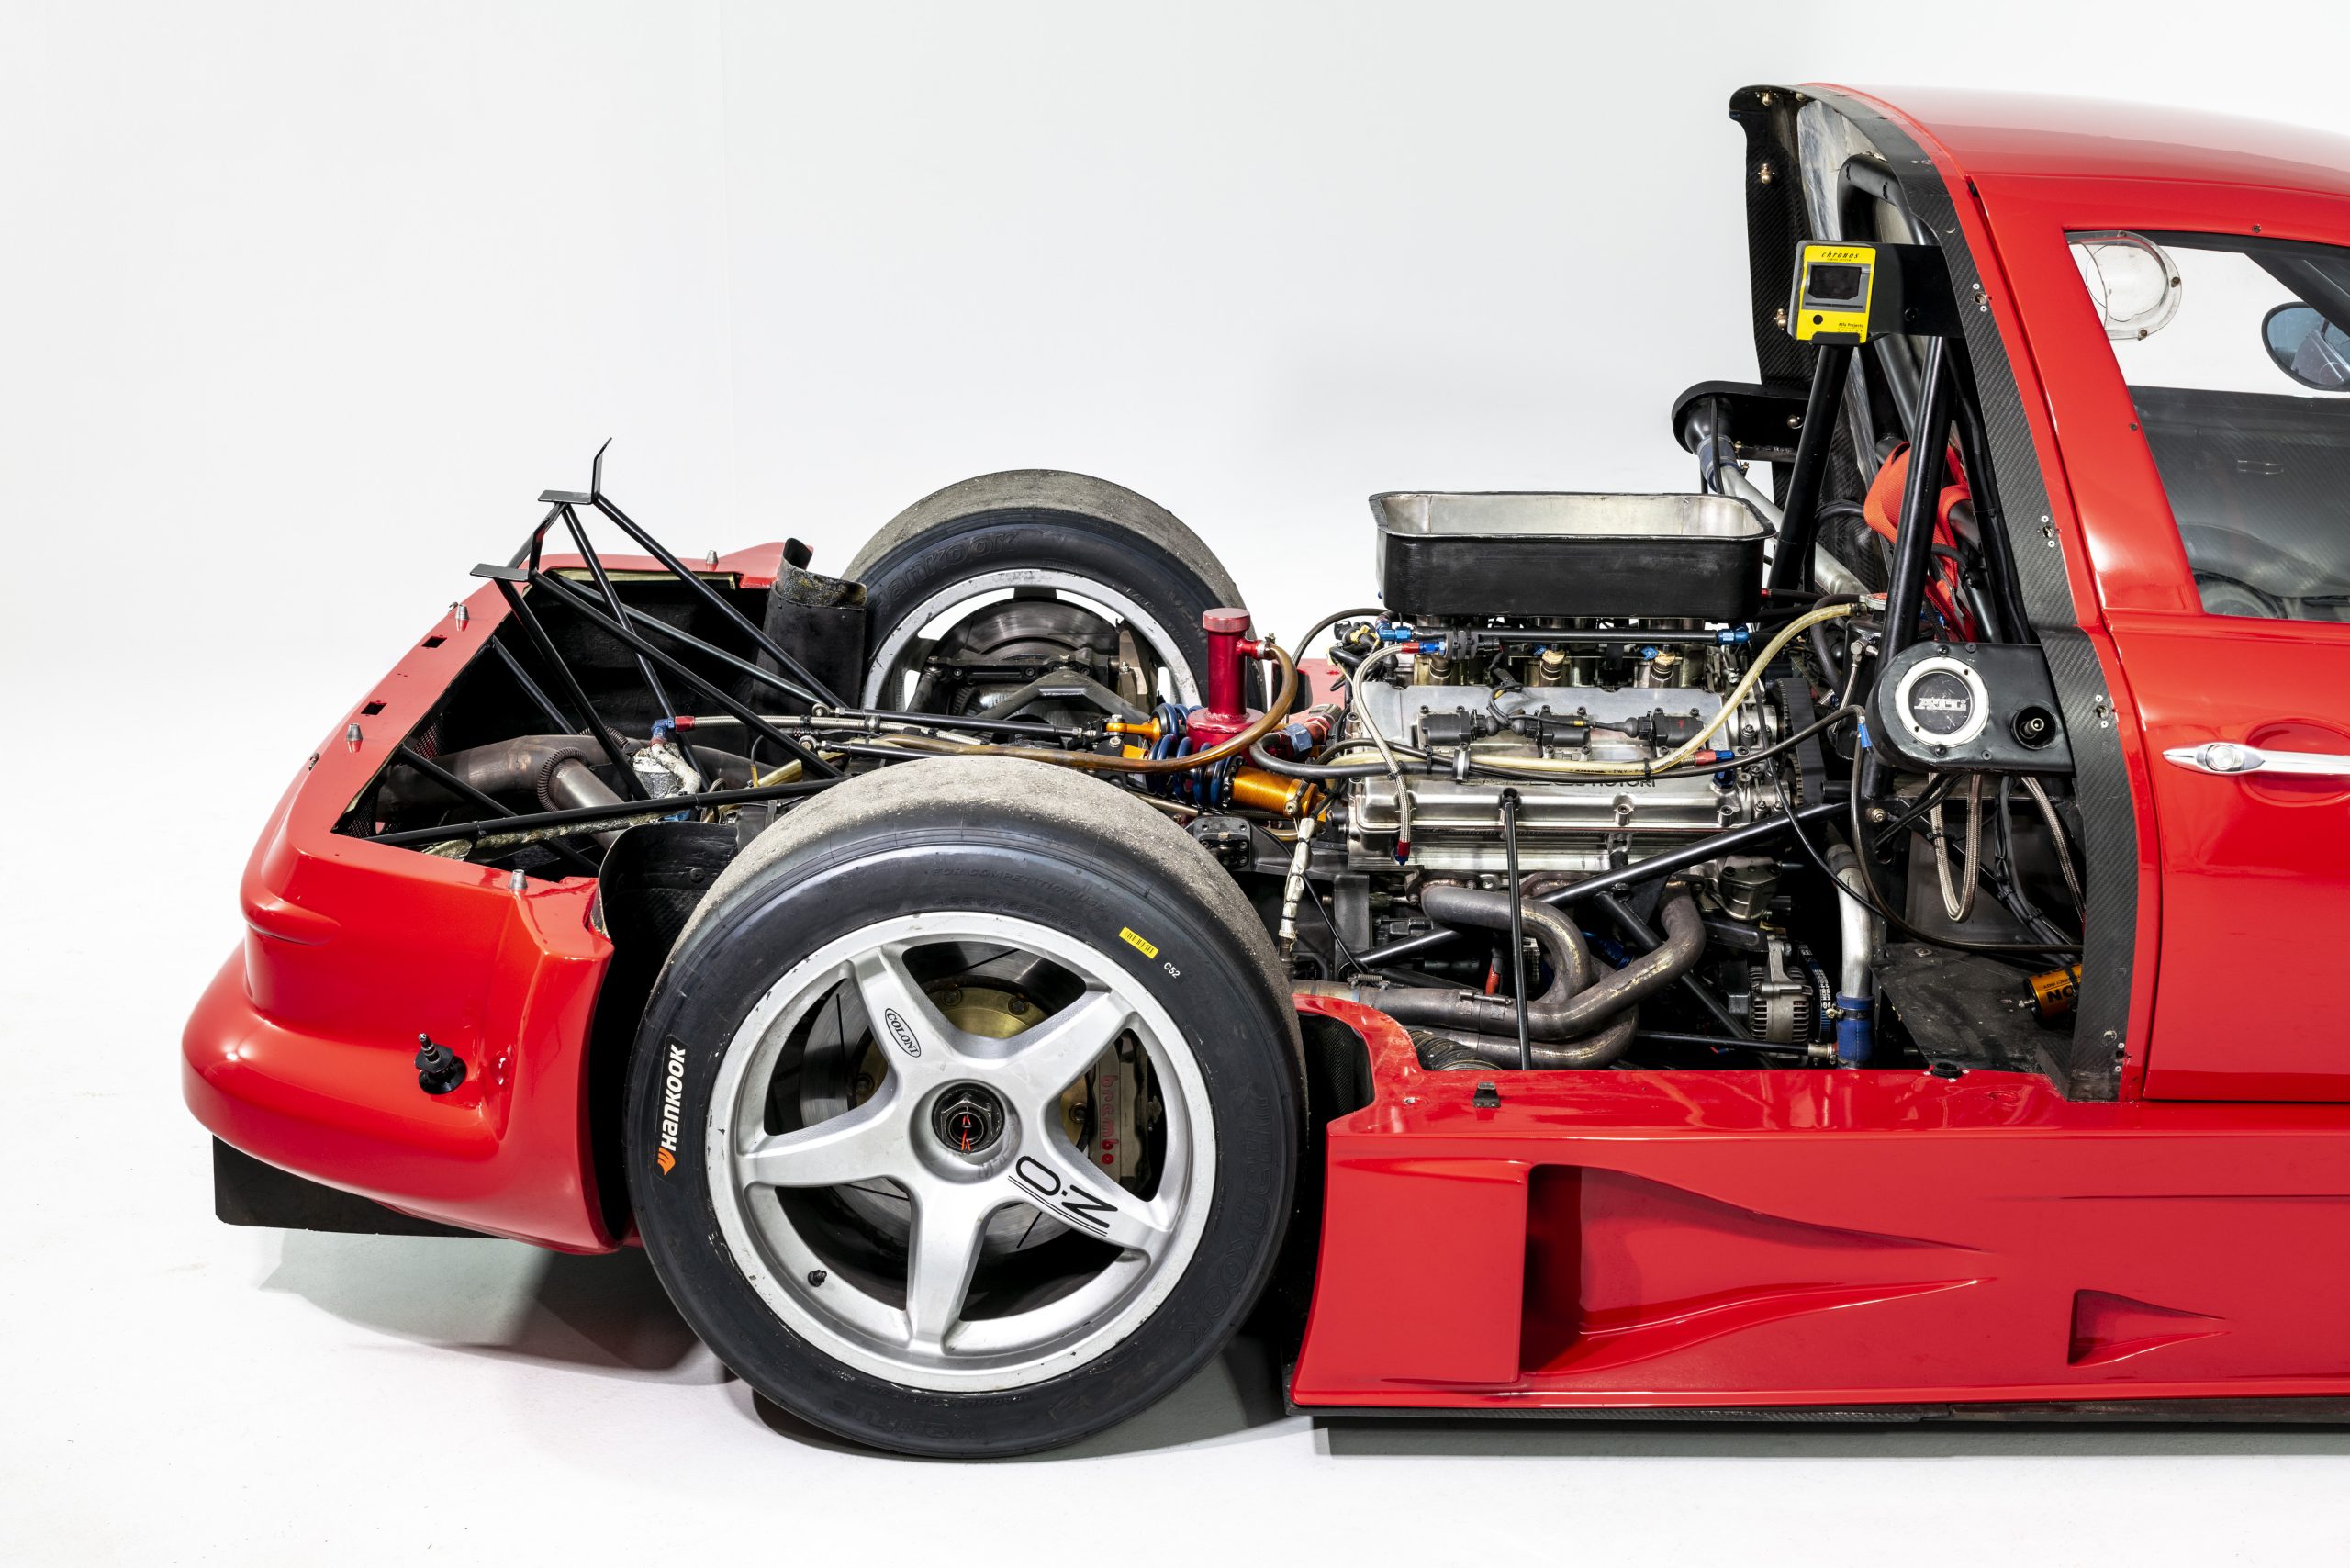 Alfa Romeo 156 Coloni S1 engine